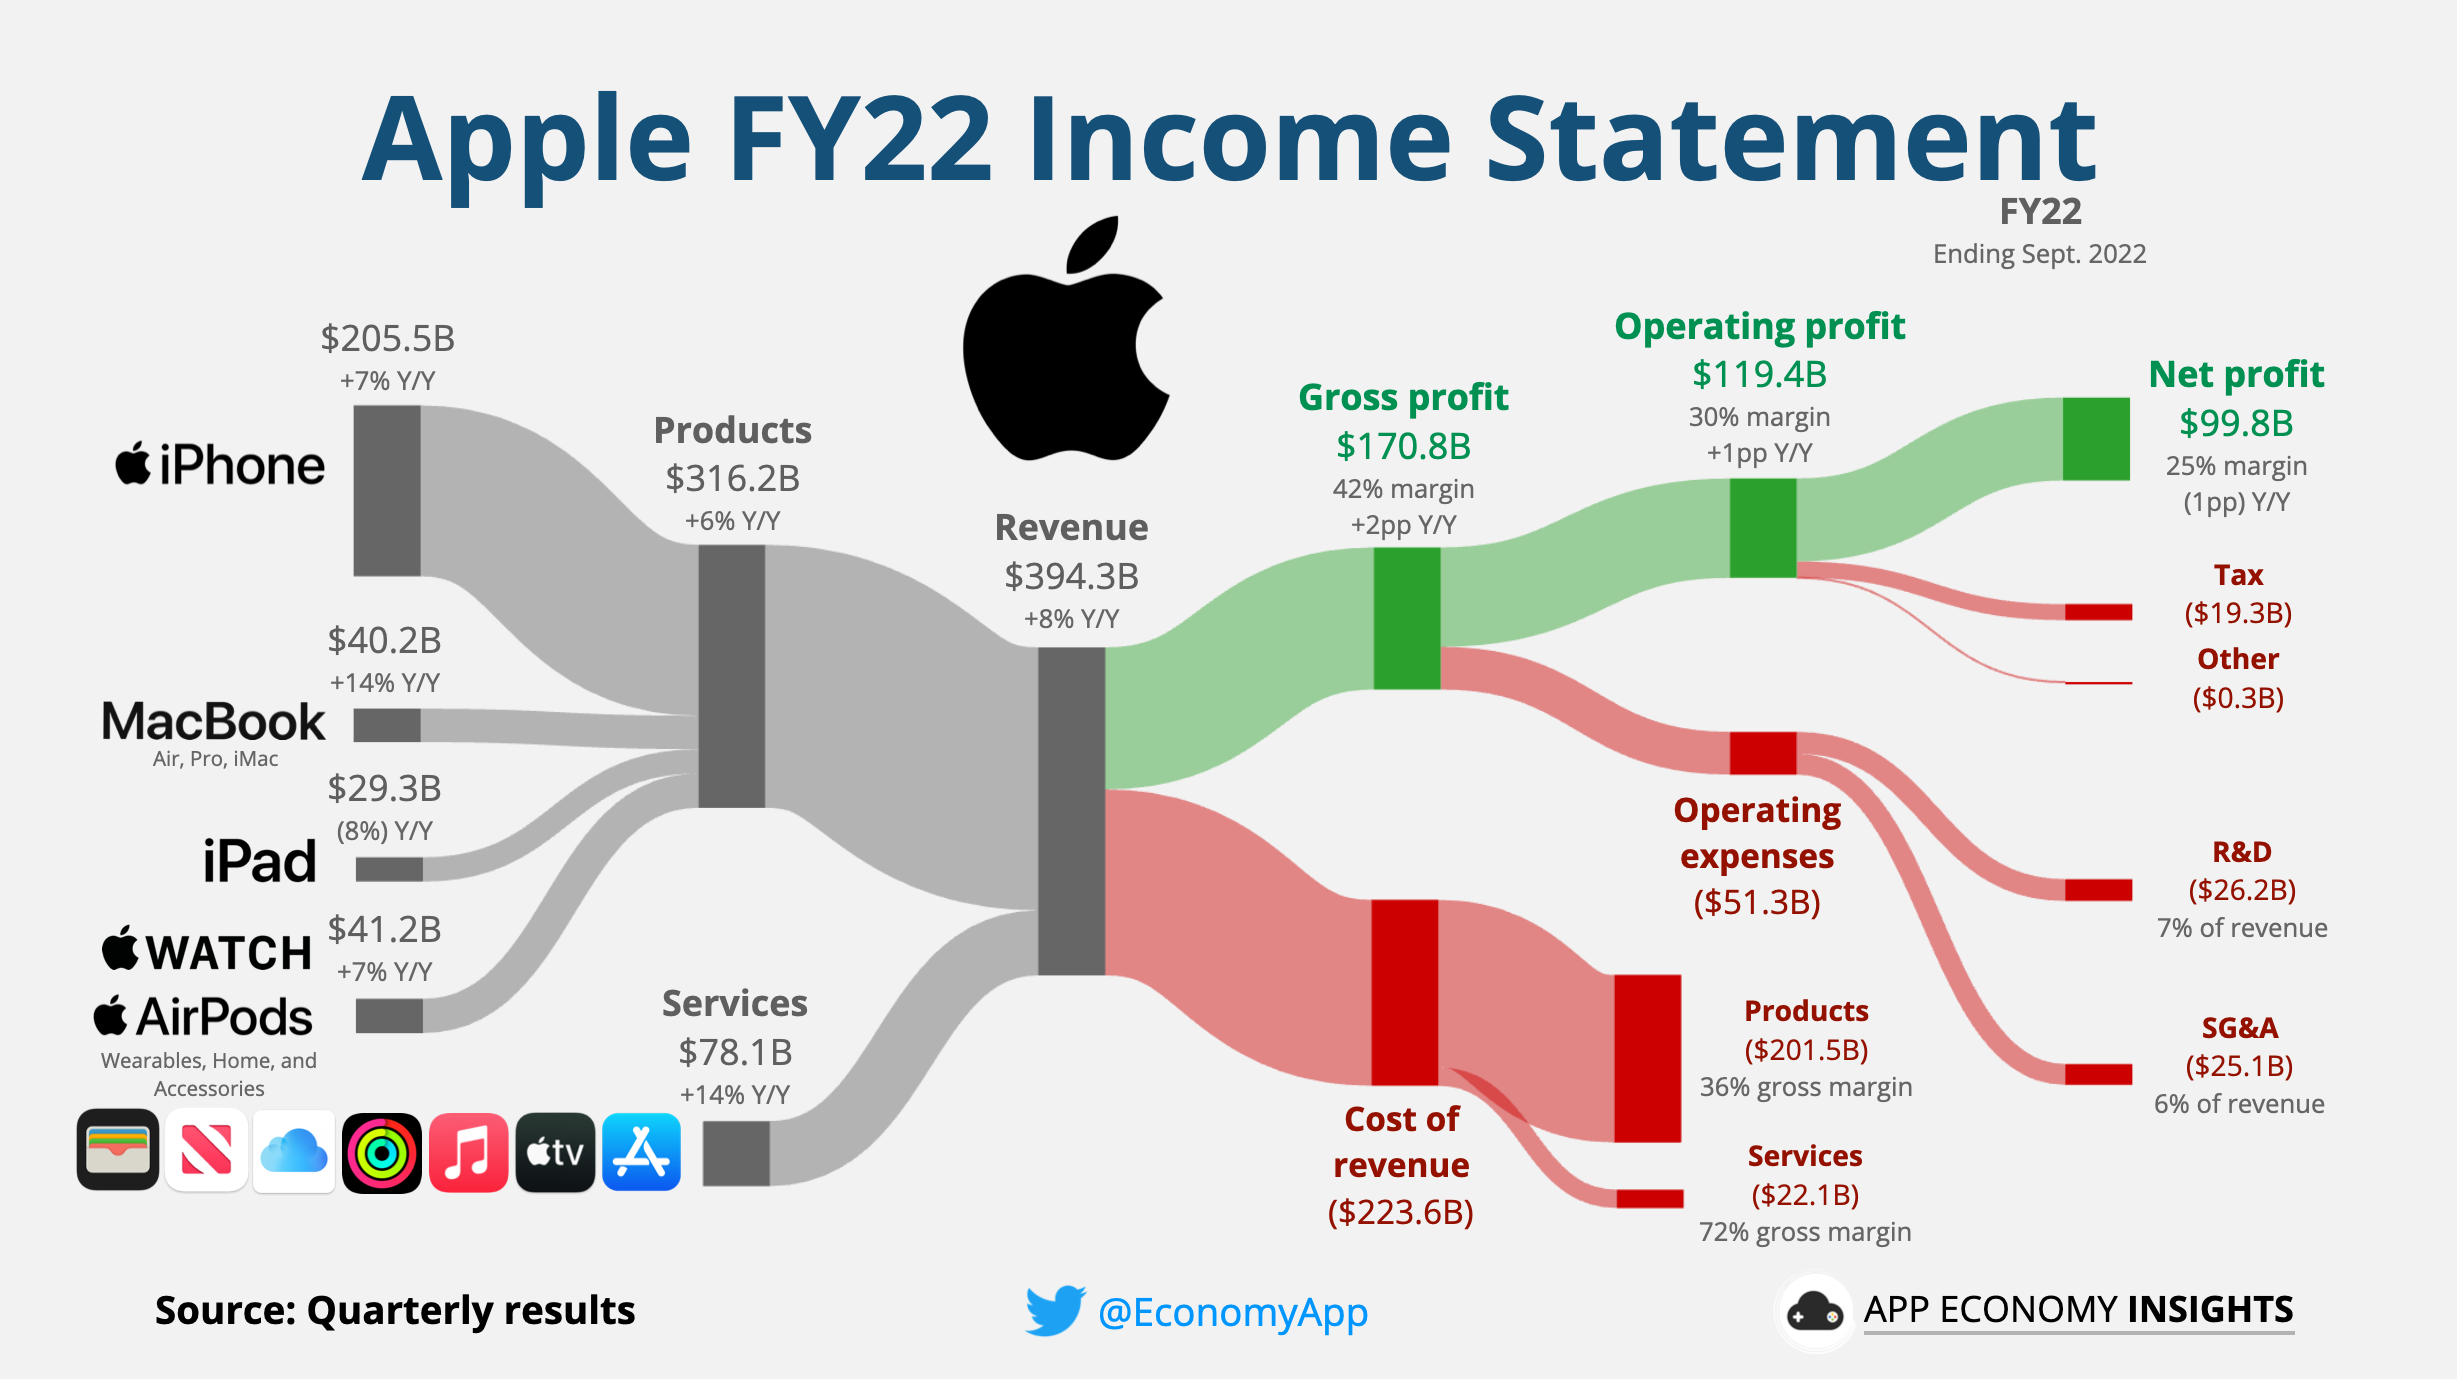 Apple statement visualized r/apple